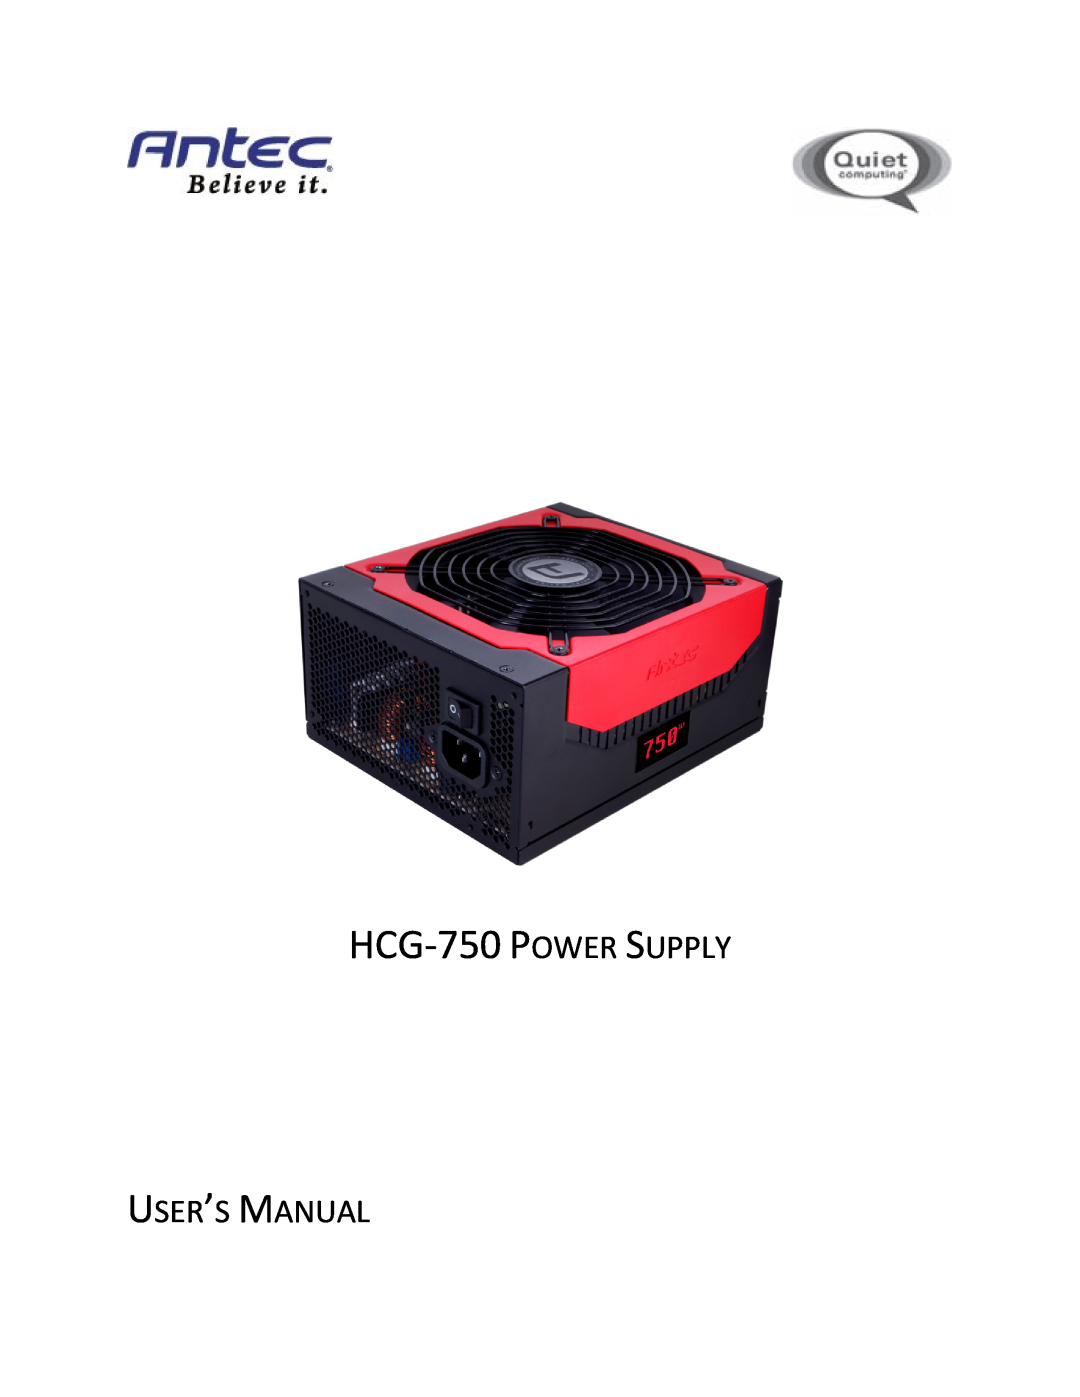 Antec user manual HCG-750 POWER SUPPLY, User’S Manual 